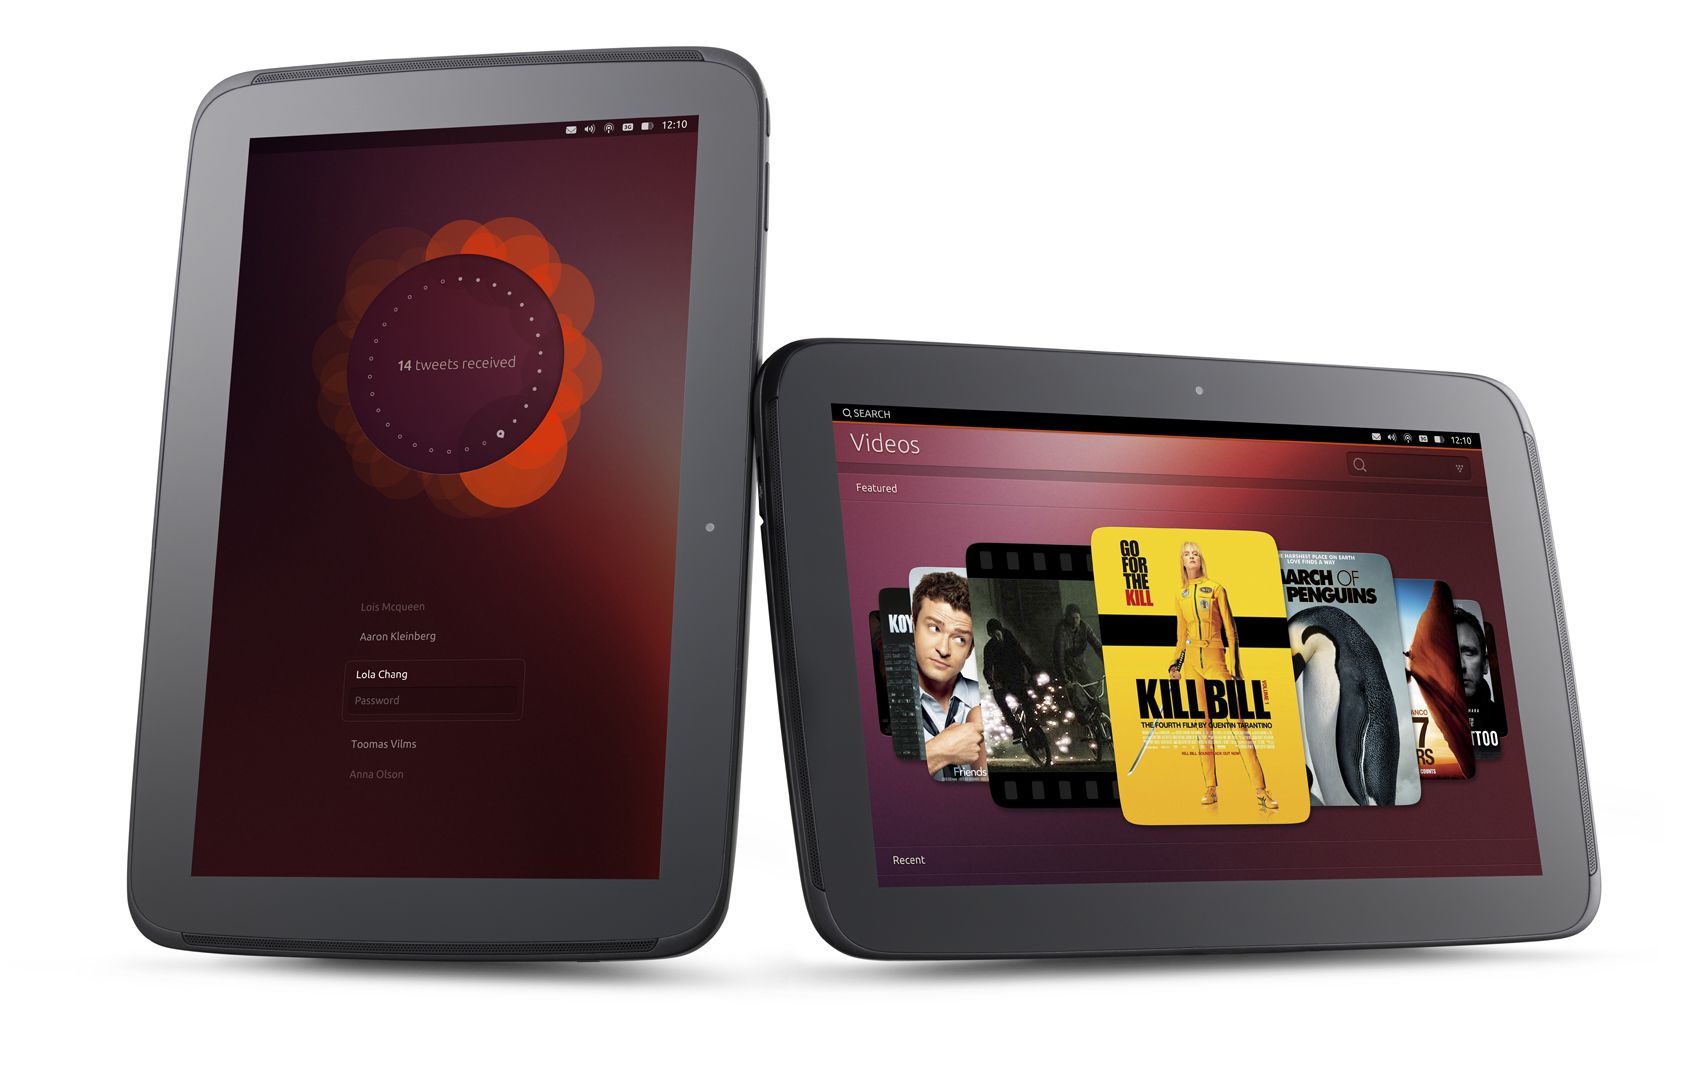 Ubuntu Touch